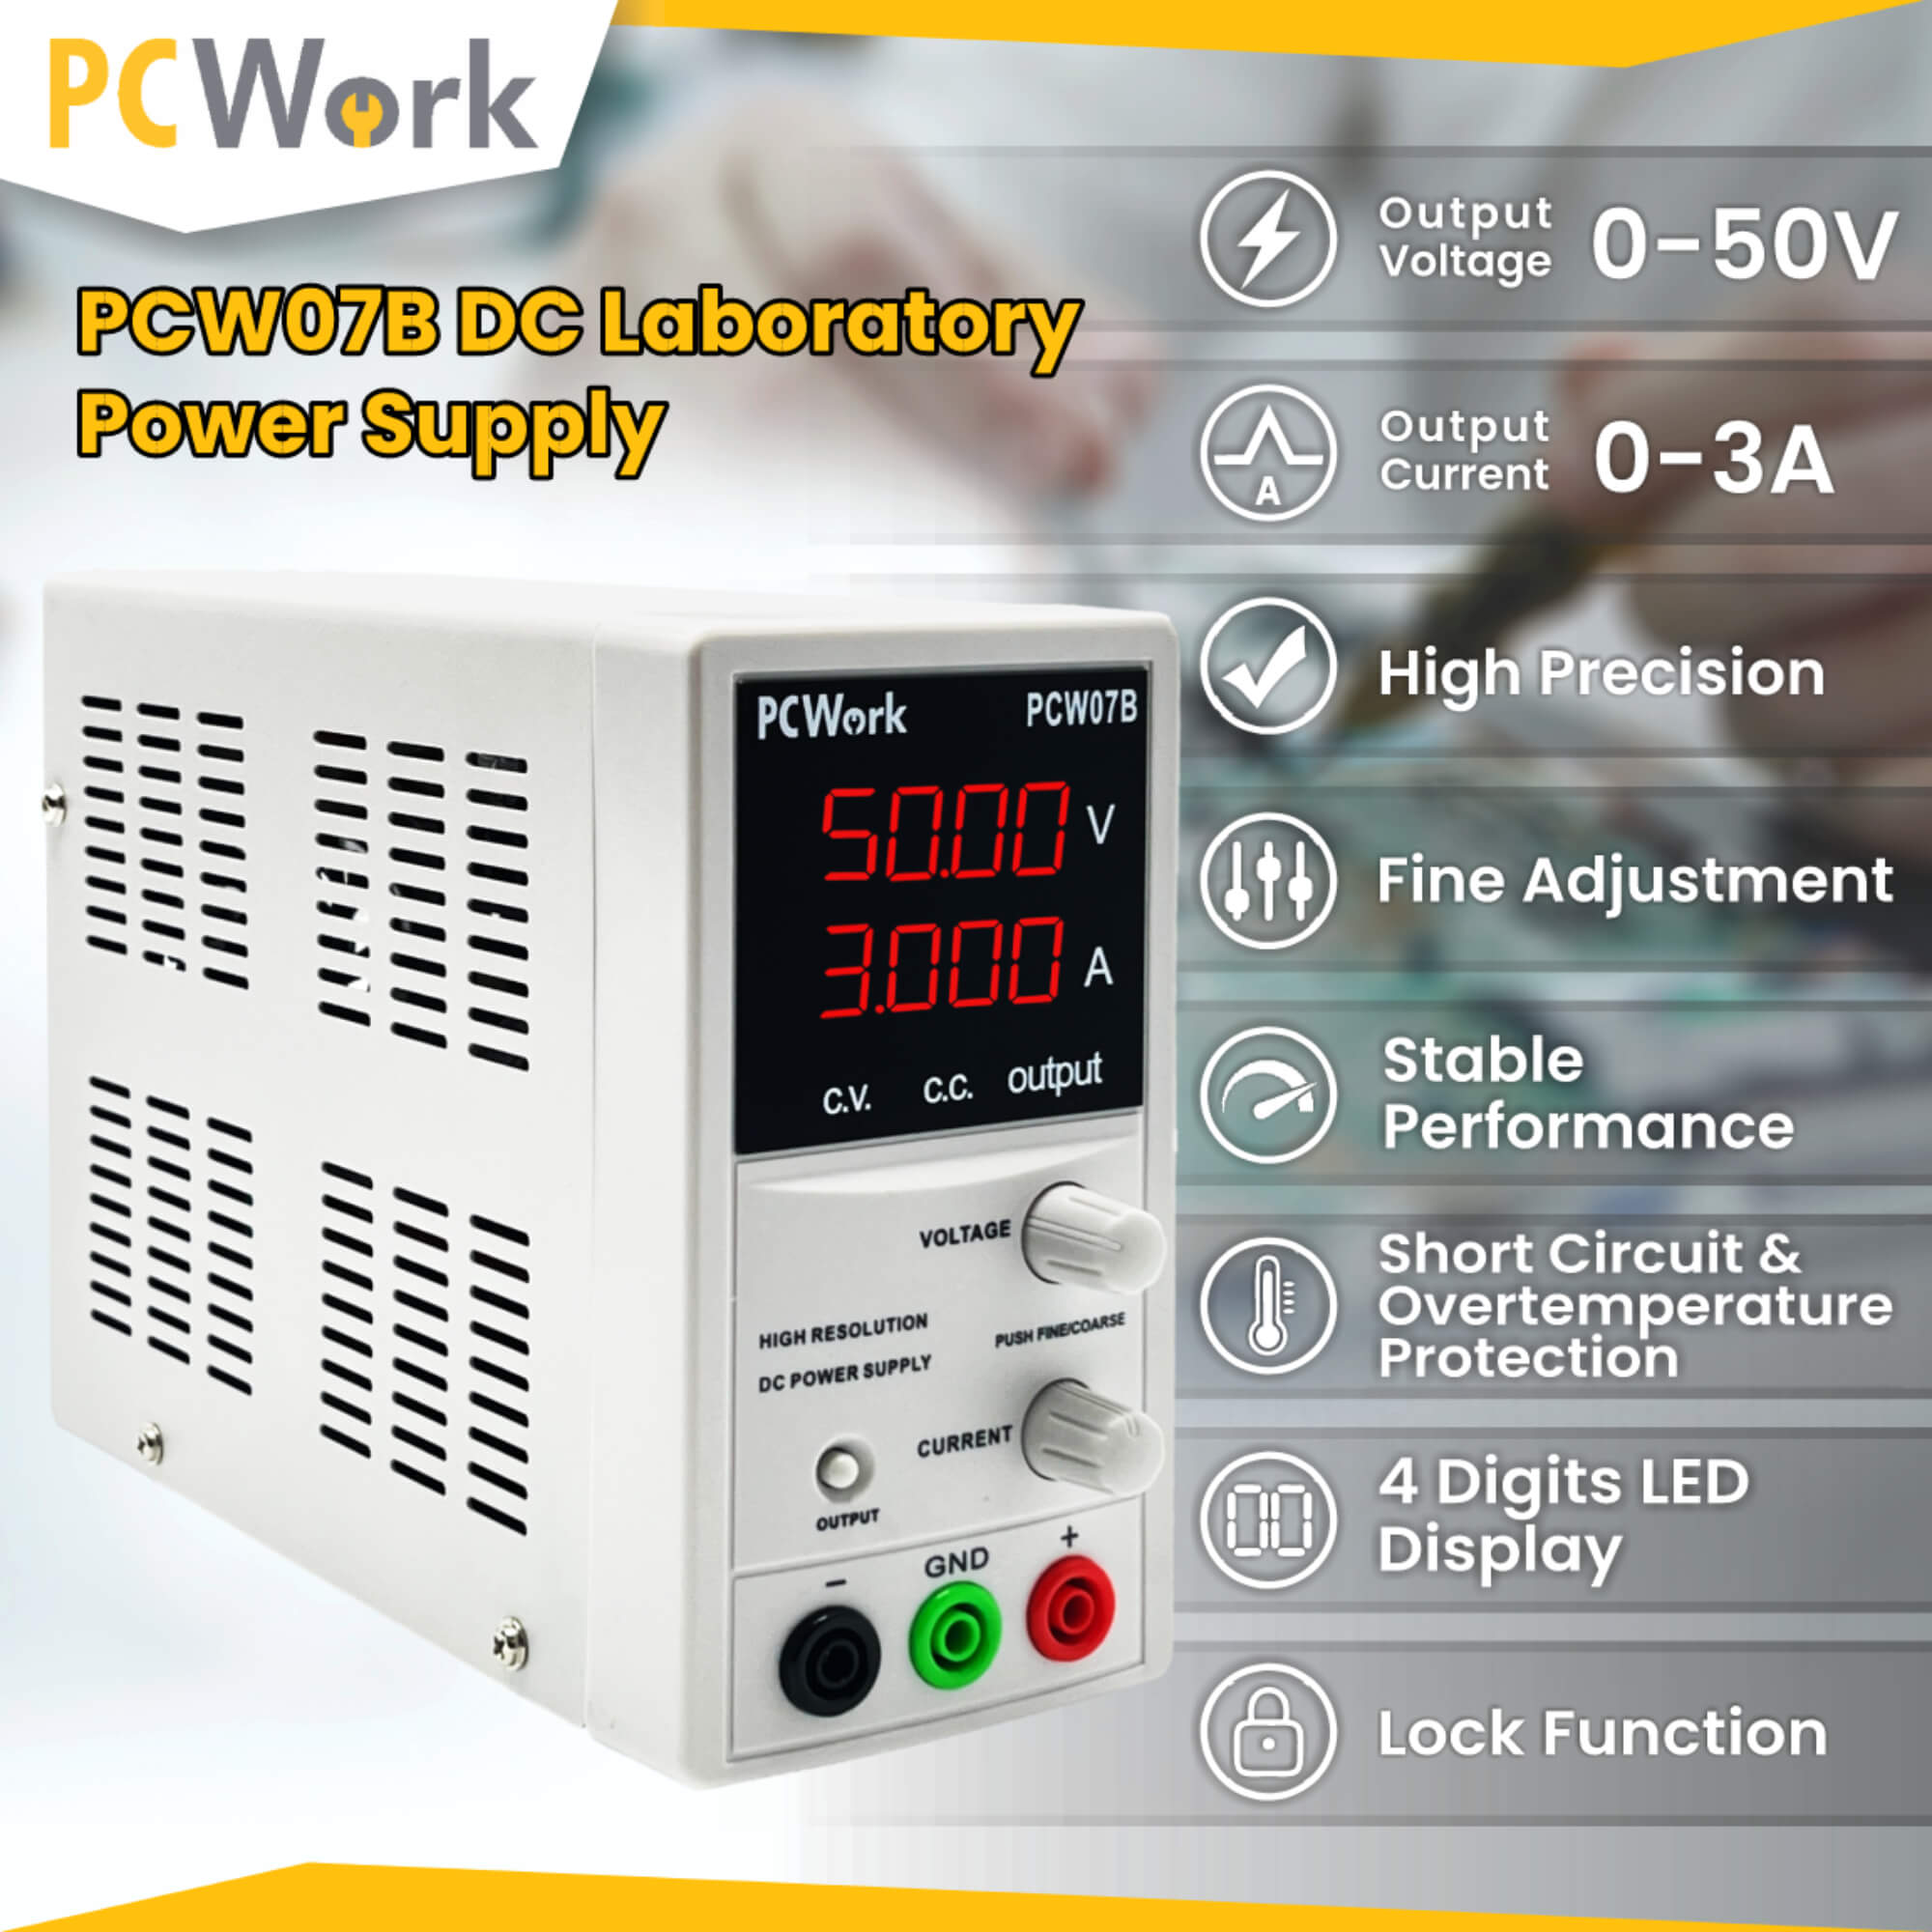 PCW07B Laboratory Power Supply, DC, 0-50V, 3A